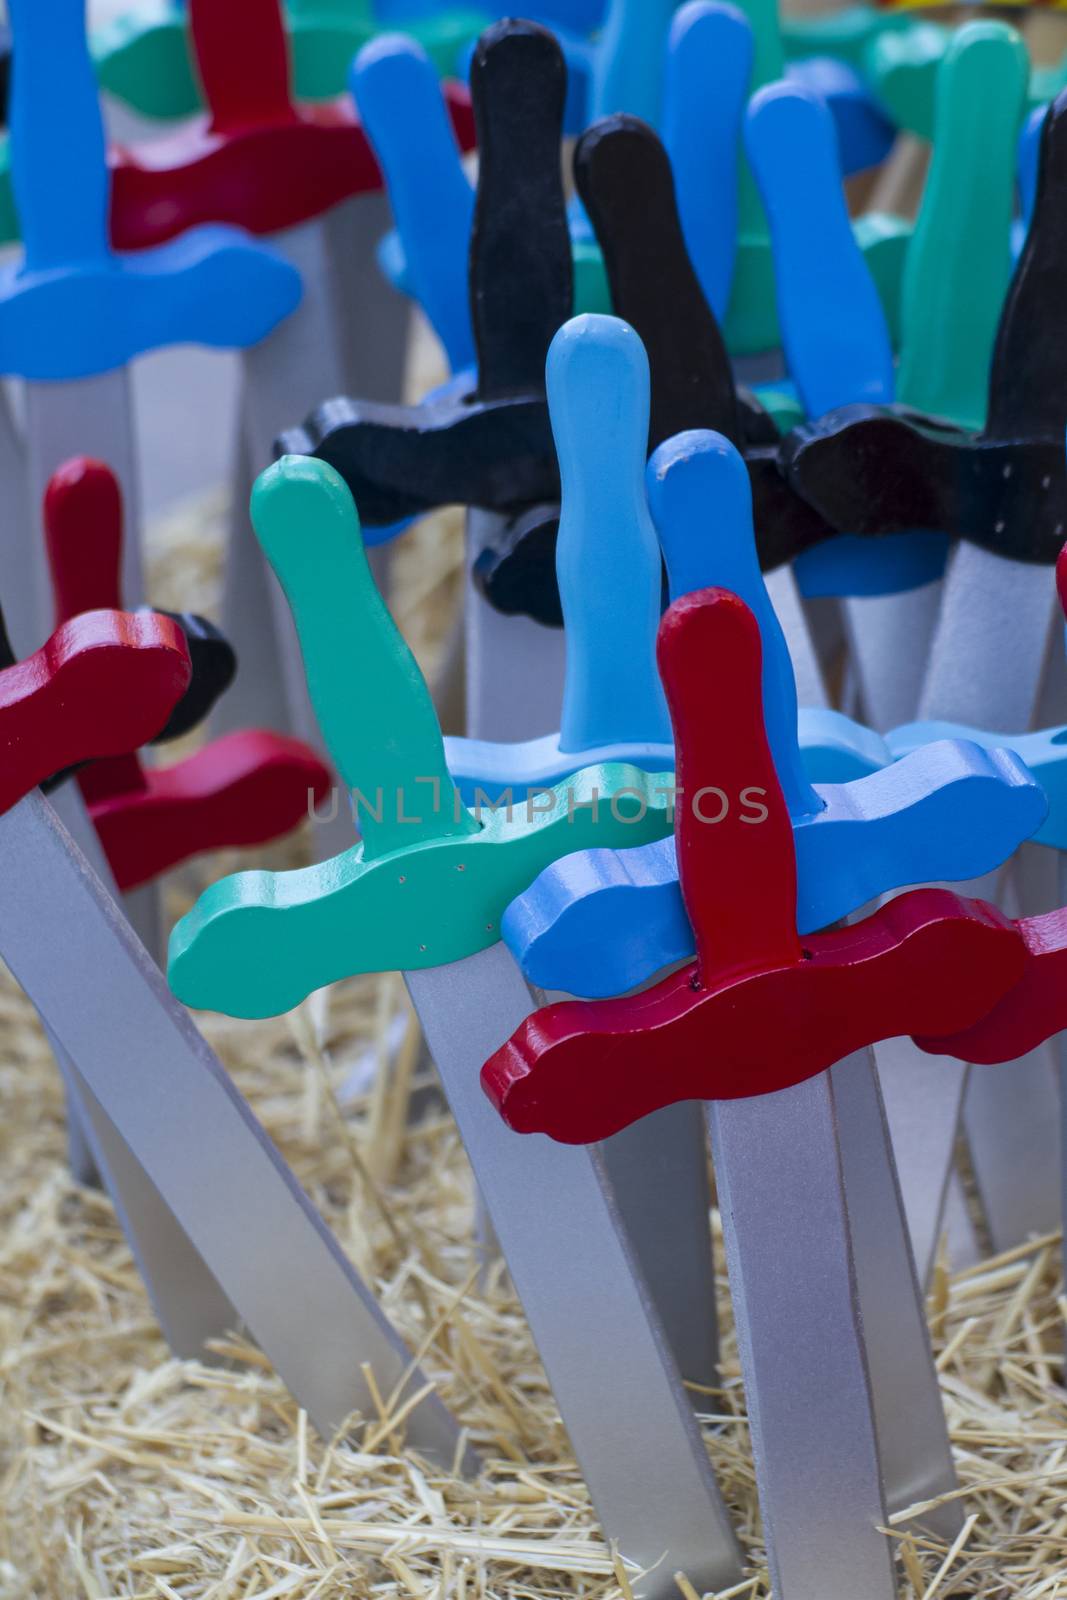 wooden swords, toys for children by FernandoCortes